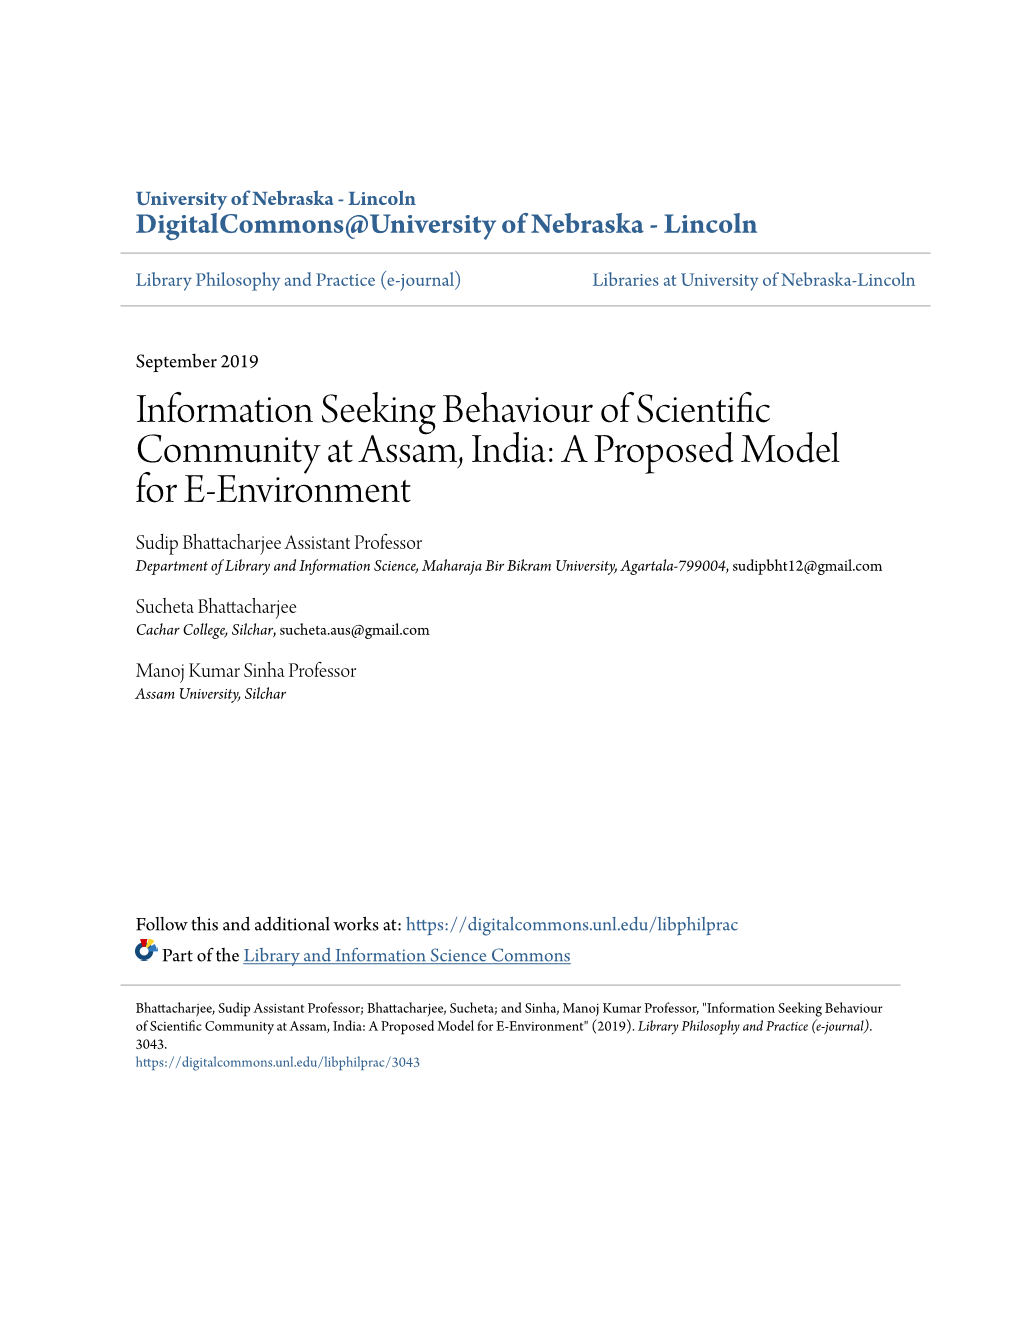 Information Seeking Behaviour of Scientific Community at Assam, India